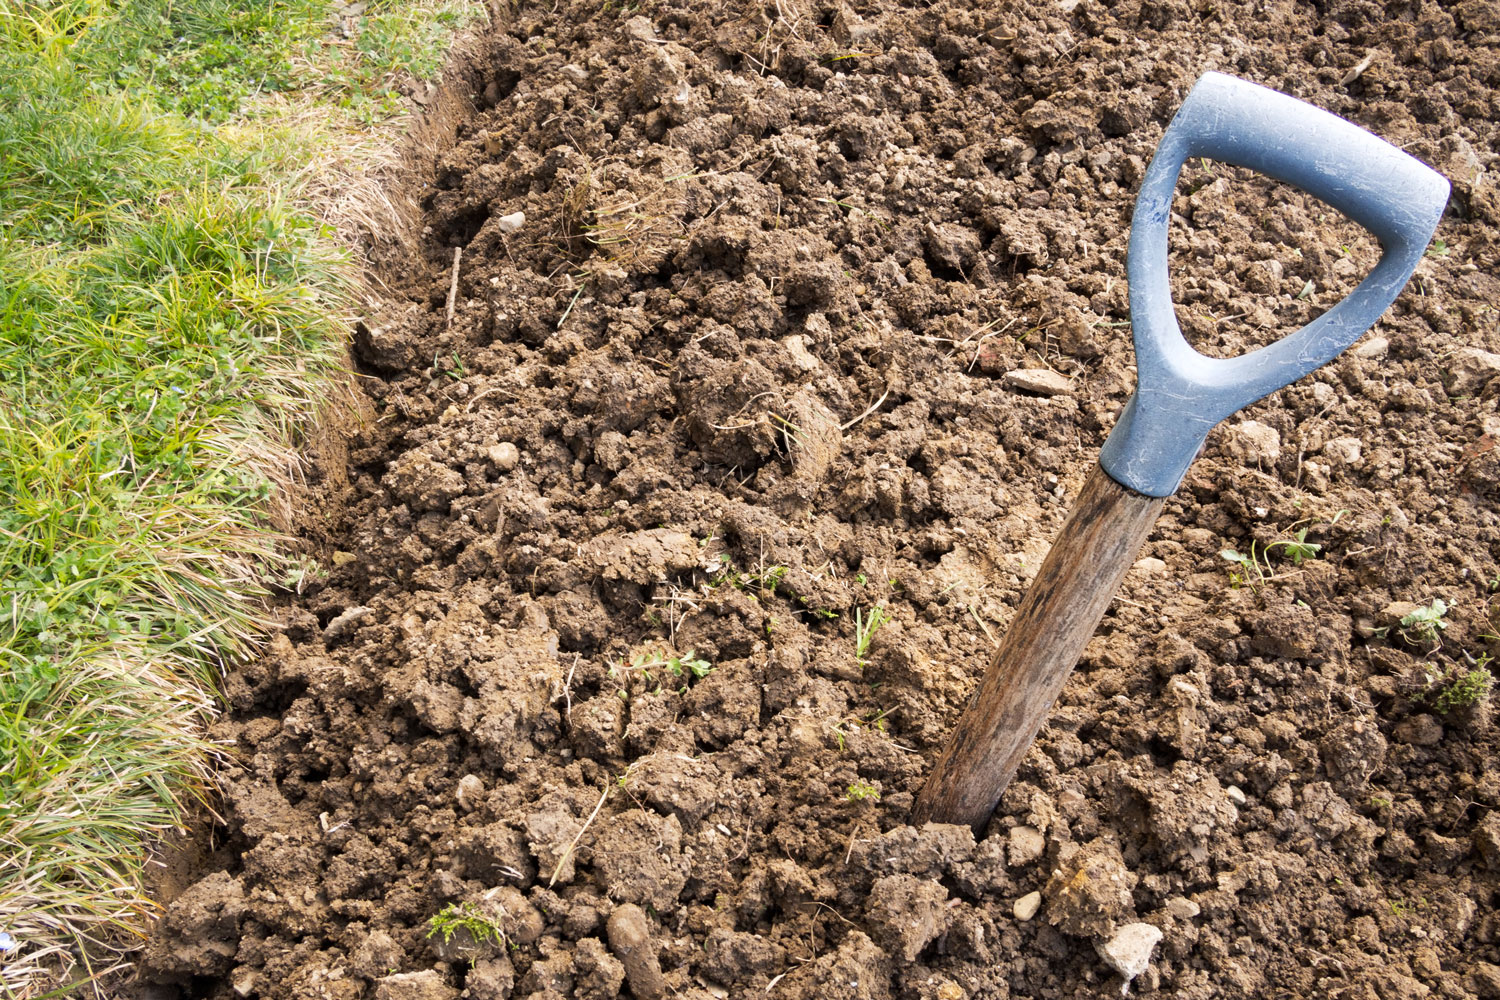 Plowing soil in the garden using a shovel